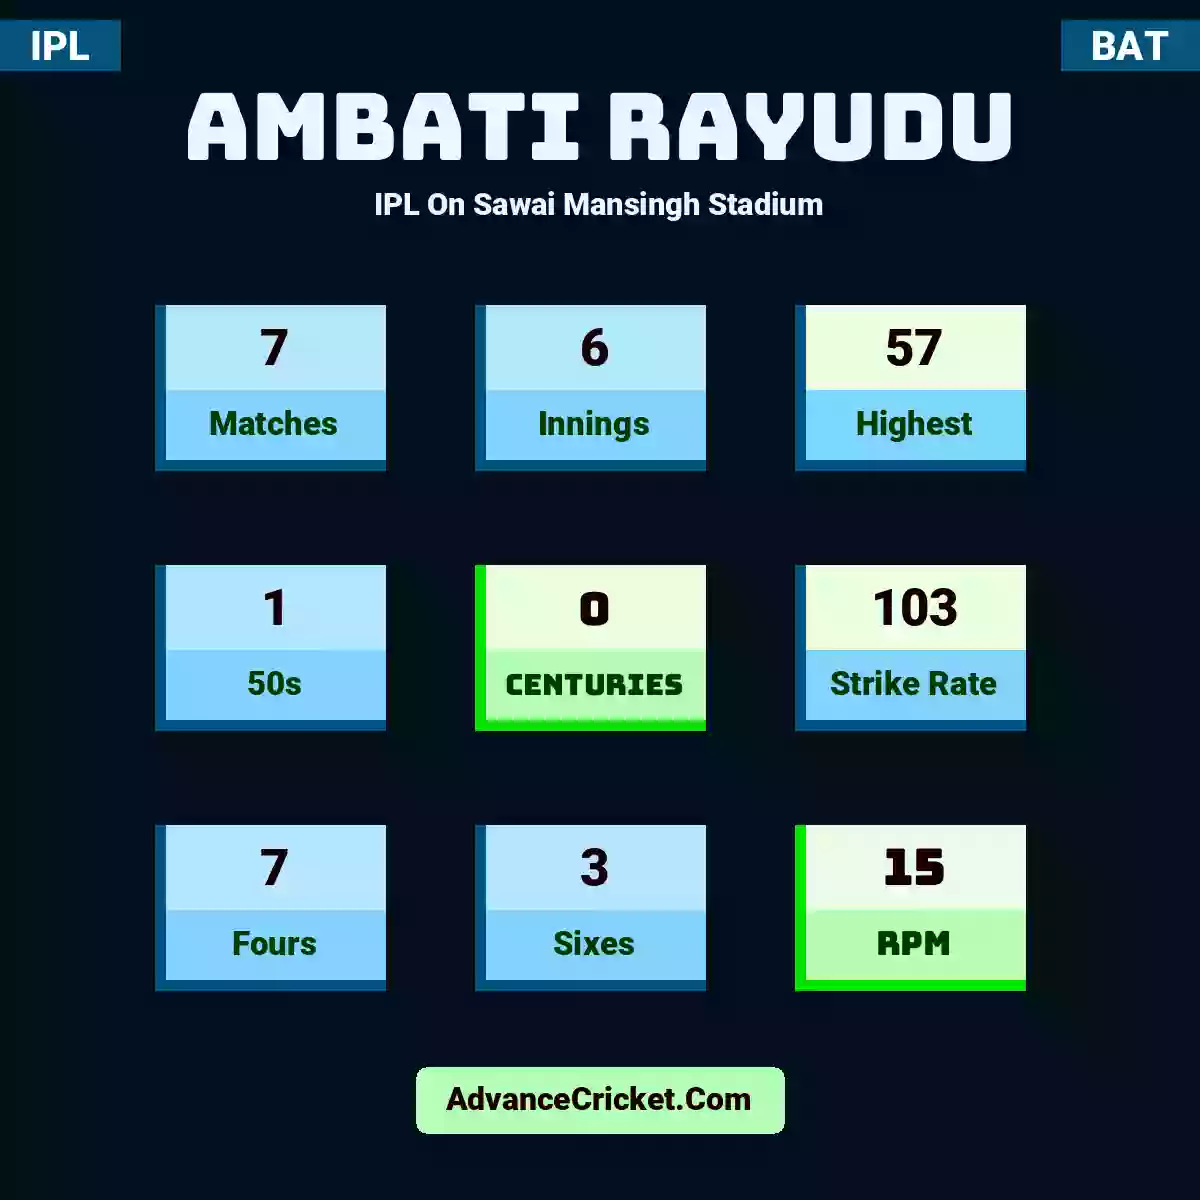 Ambati Rayudu IPL  On Sawai Mansingh Stadium, Ambati Rayudu played 7 matches, scored 57 runs as highest, 1 half-centuries, and 0 centuries, with a strike rate of 103. A.Rayudu hit 7 fours and 3 sixes, with an RPM of 15.